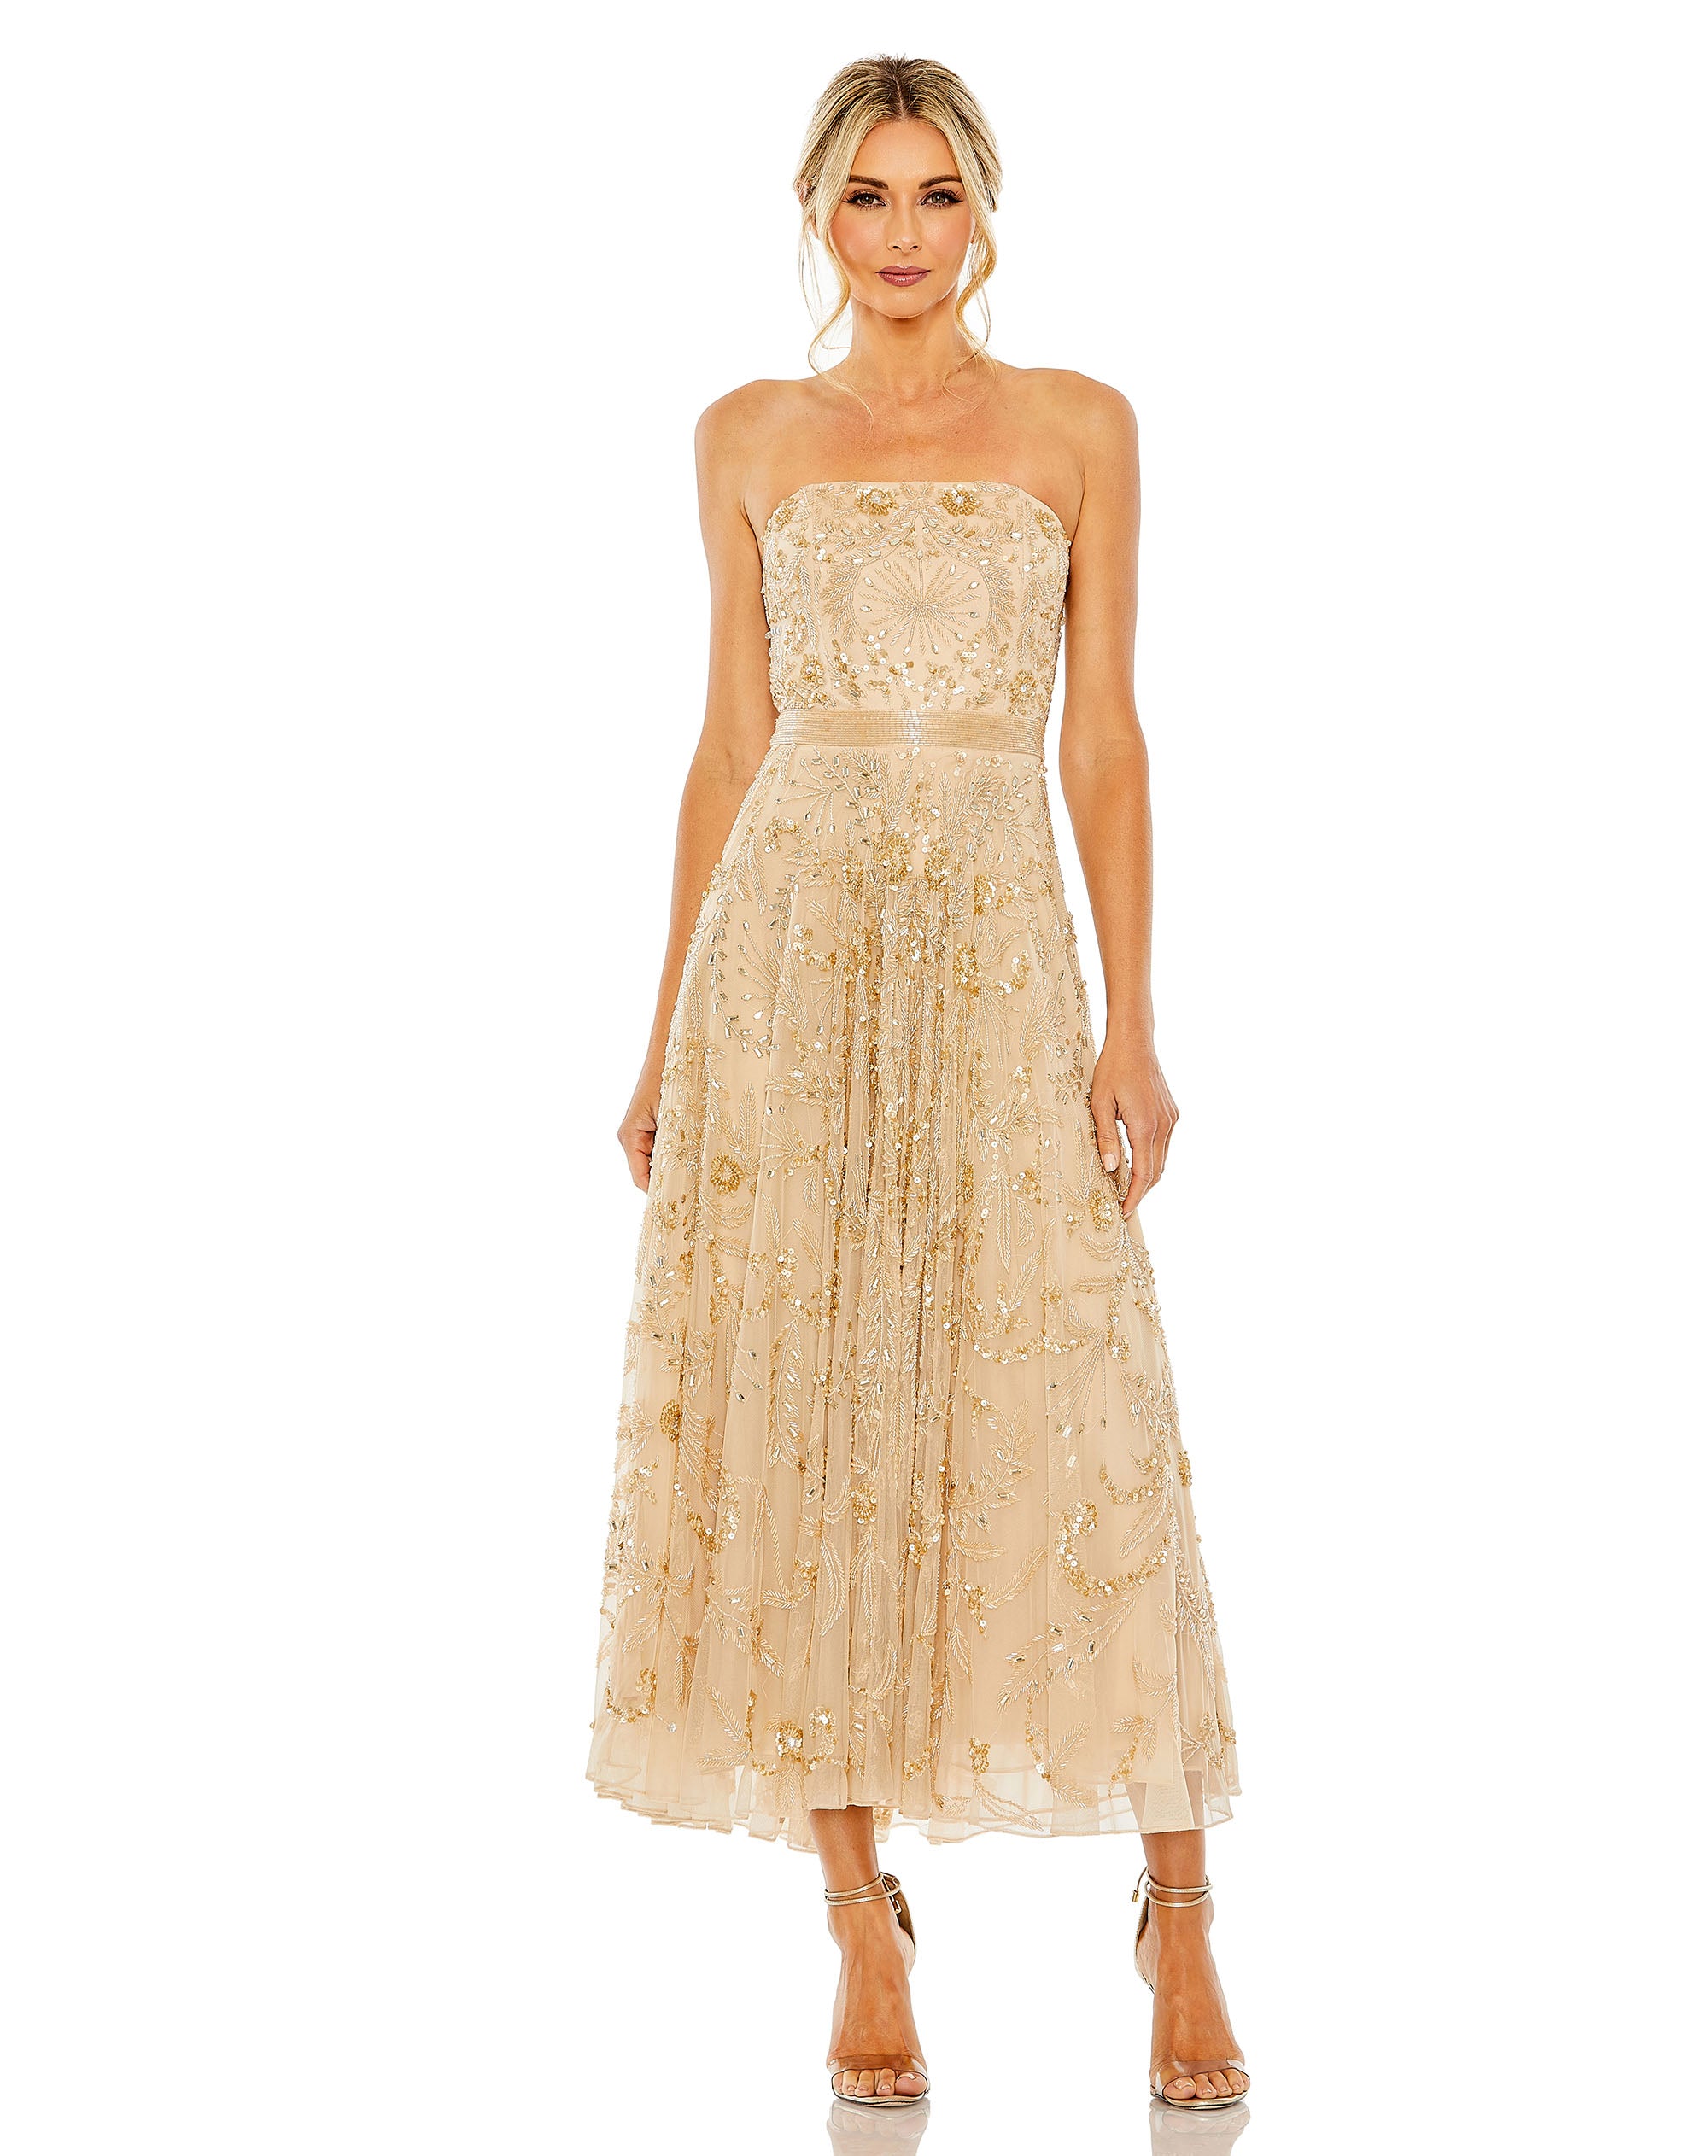 Strapless Embellished A Line Dress – Mac Duggal